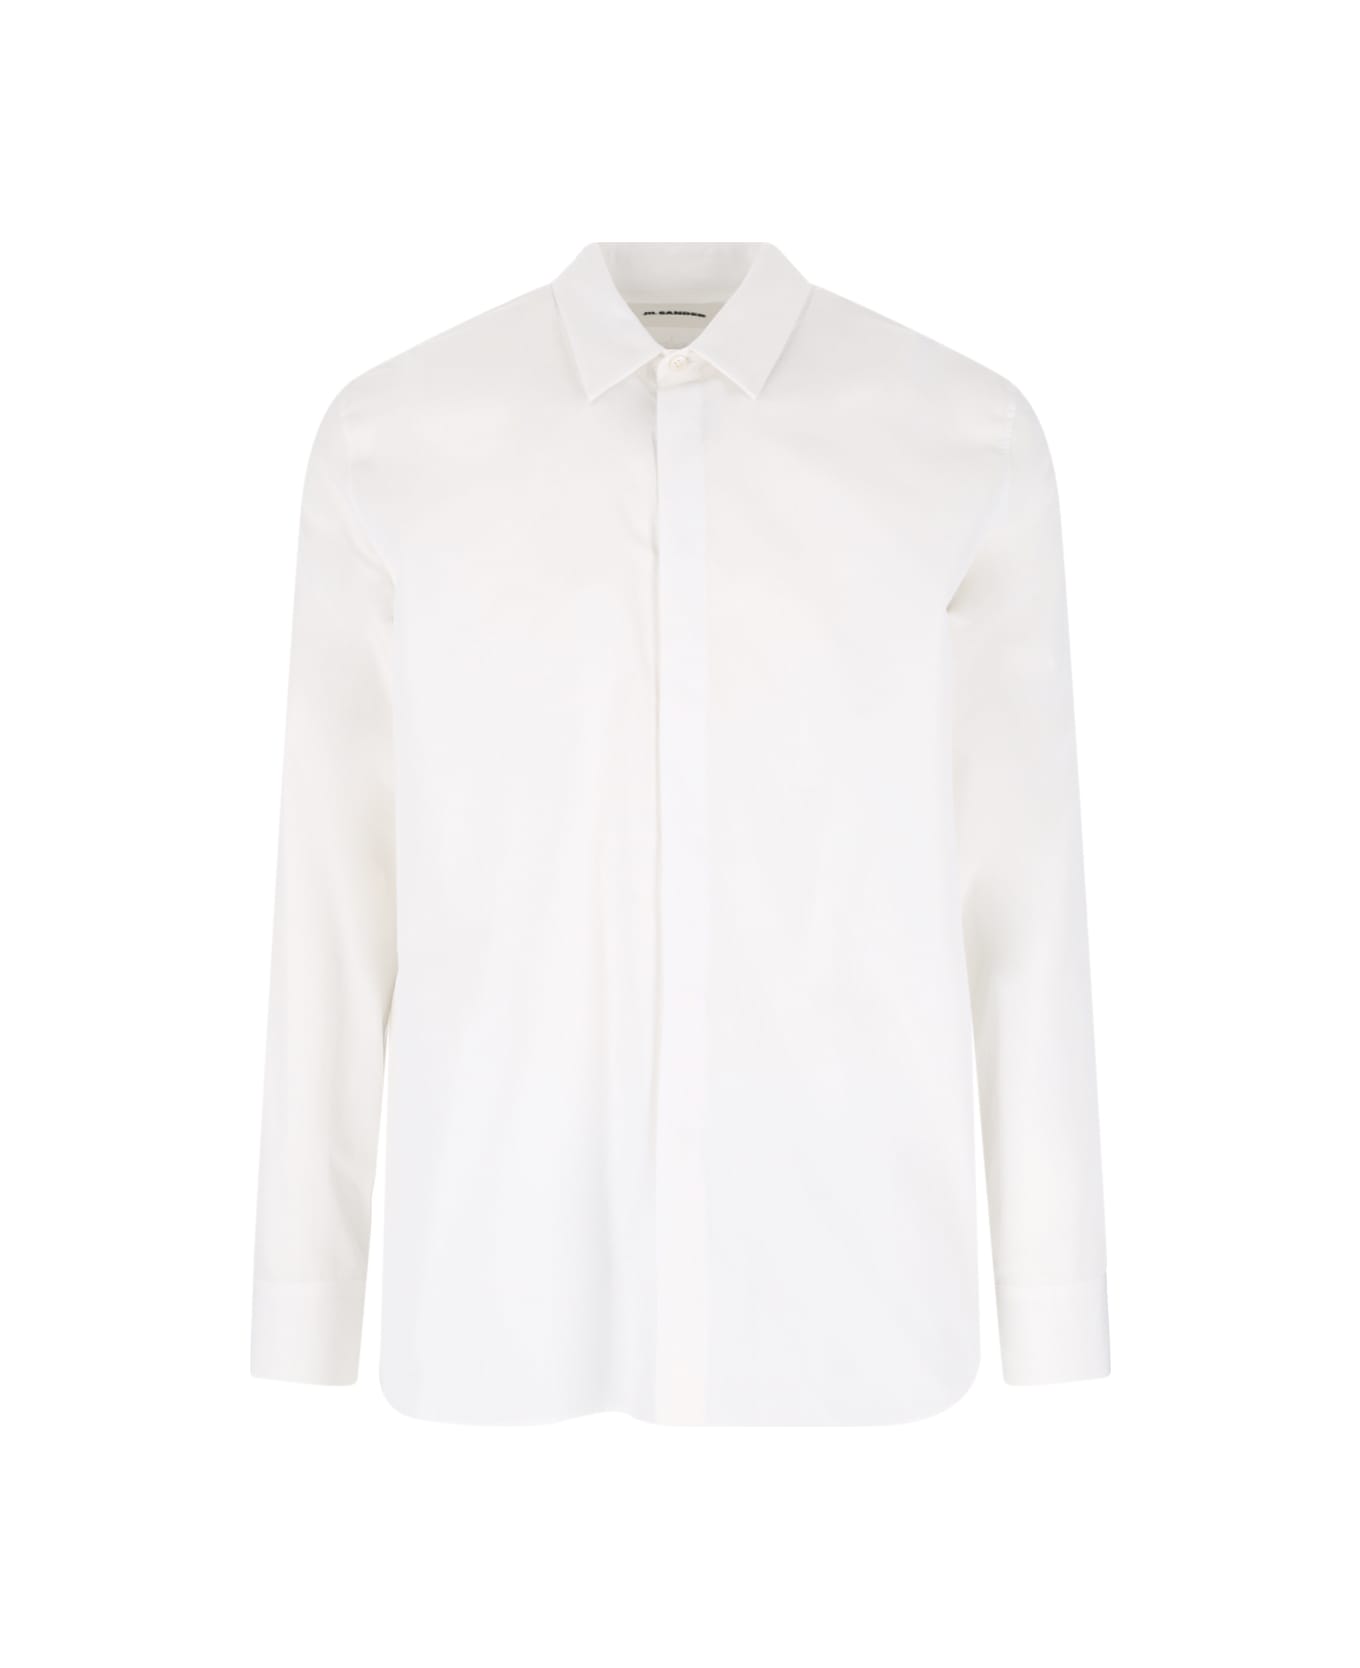 Jil Sander Classic Shirt - White